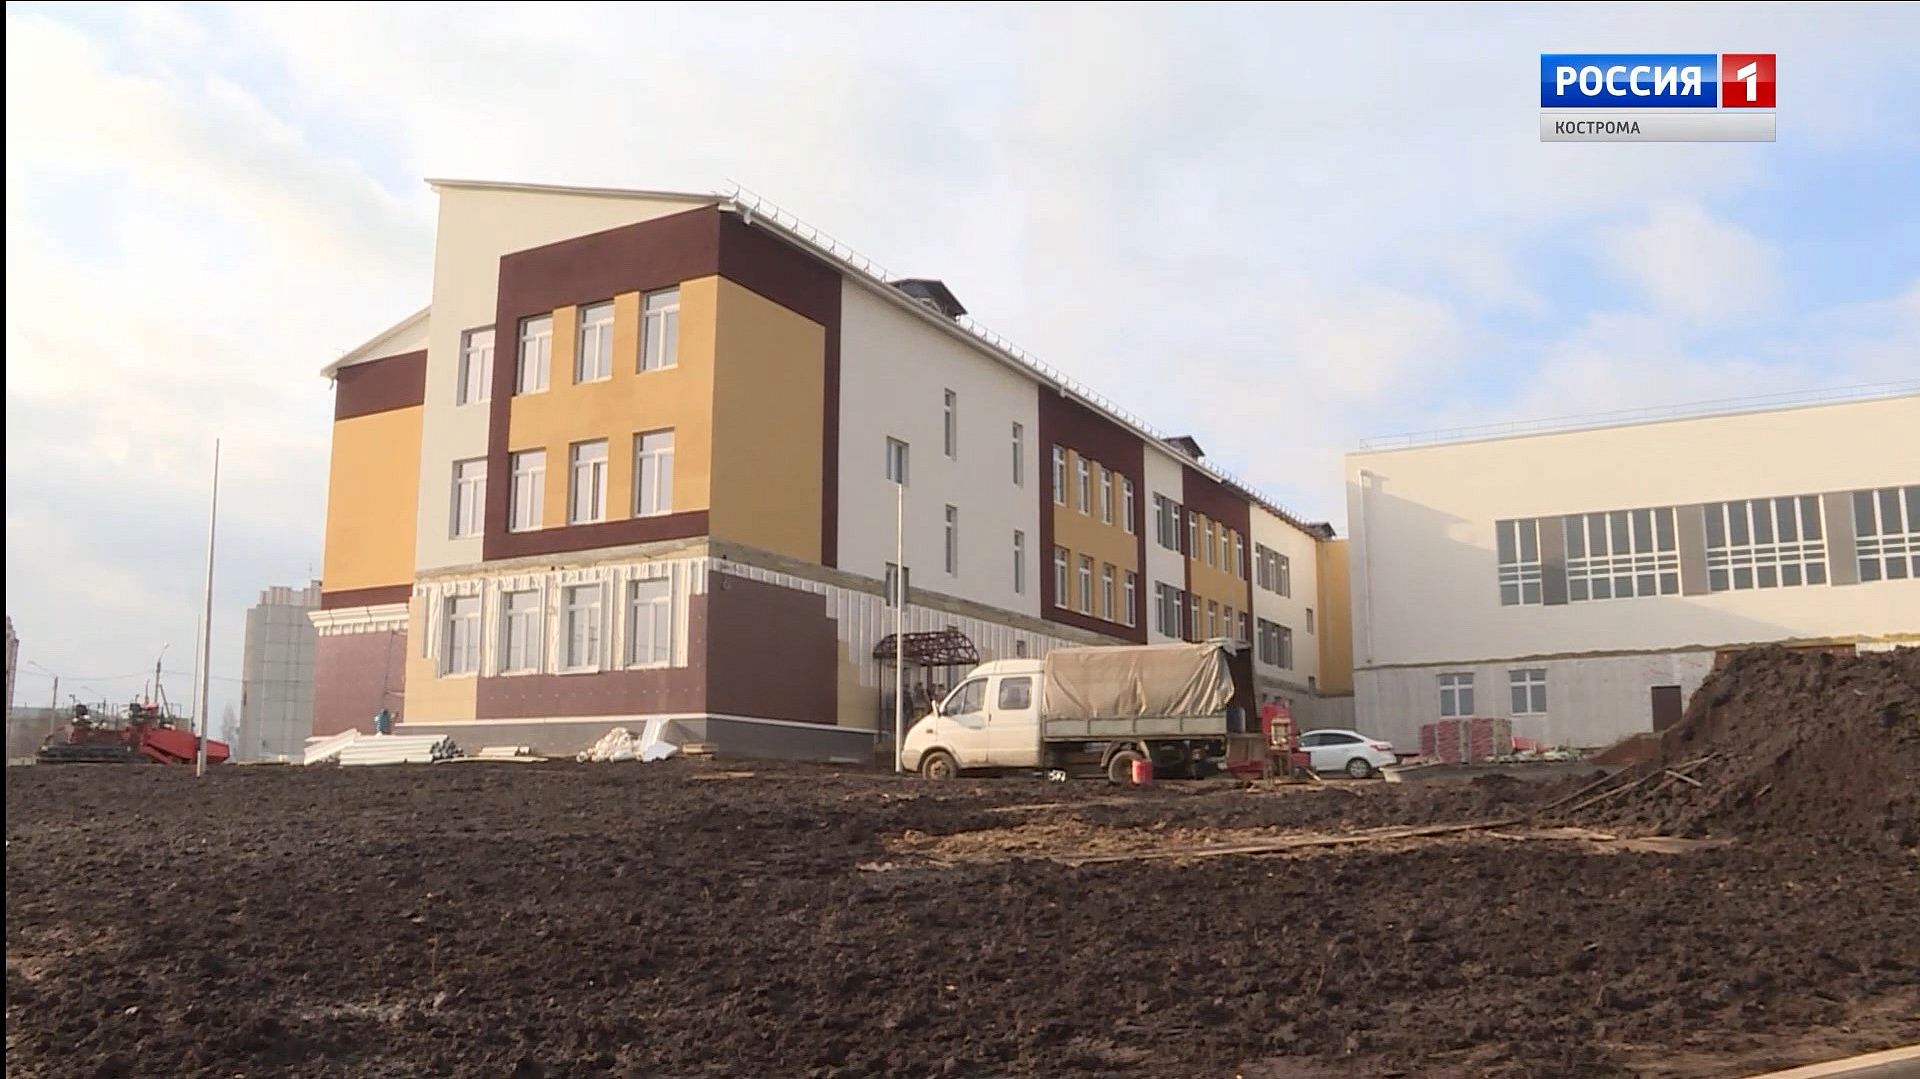 Крупнейшую школу в Костроме достроят до конца года